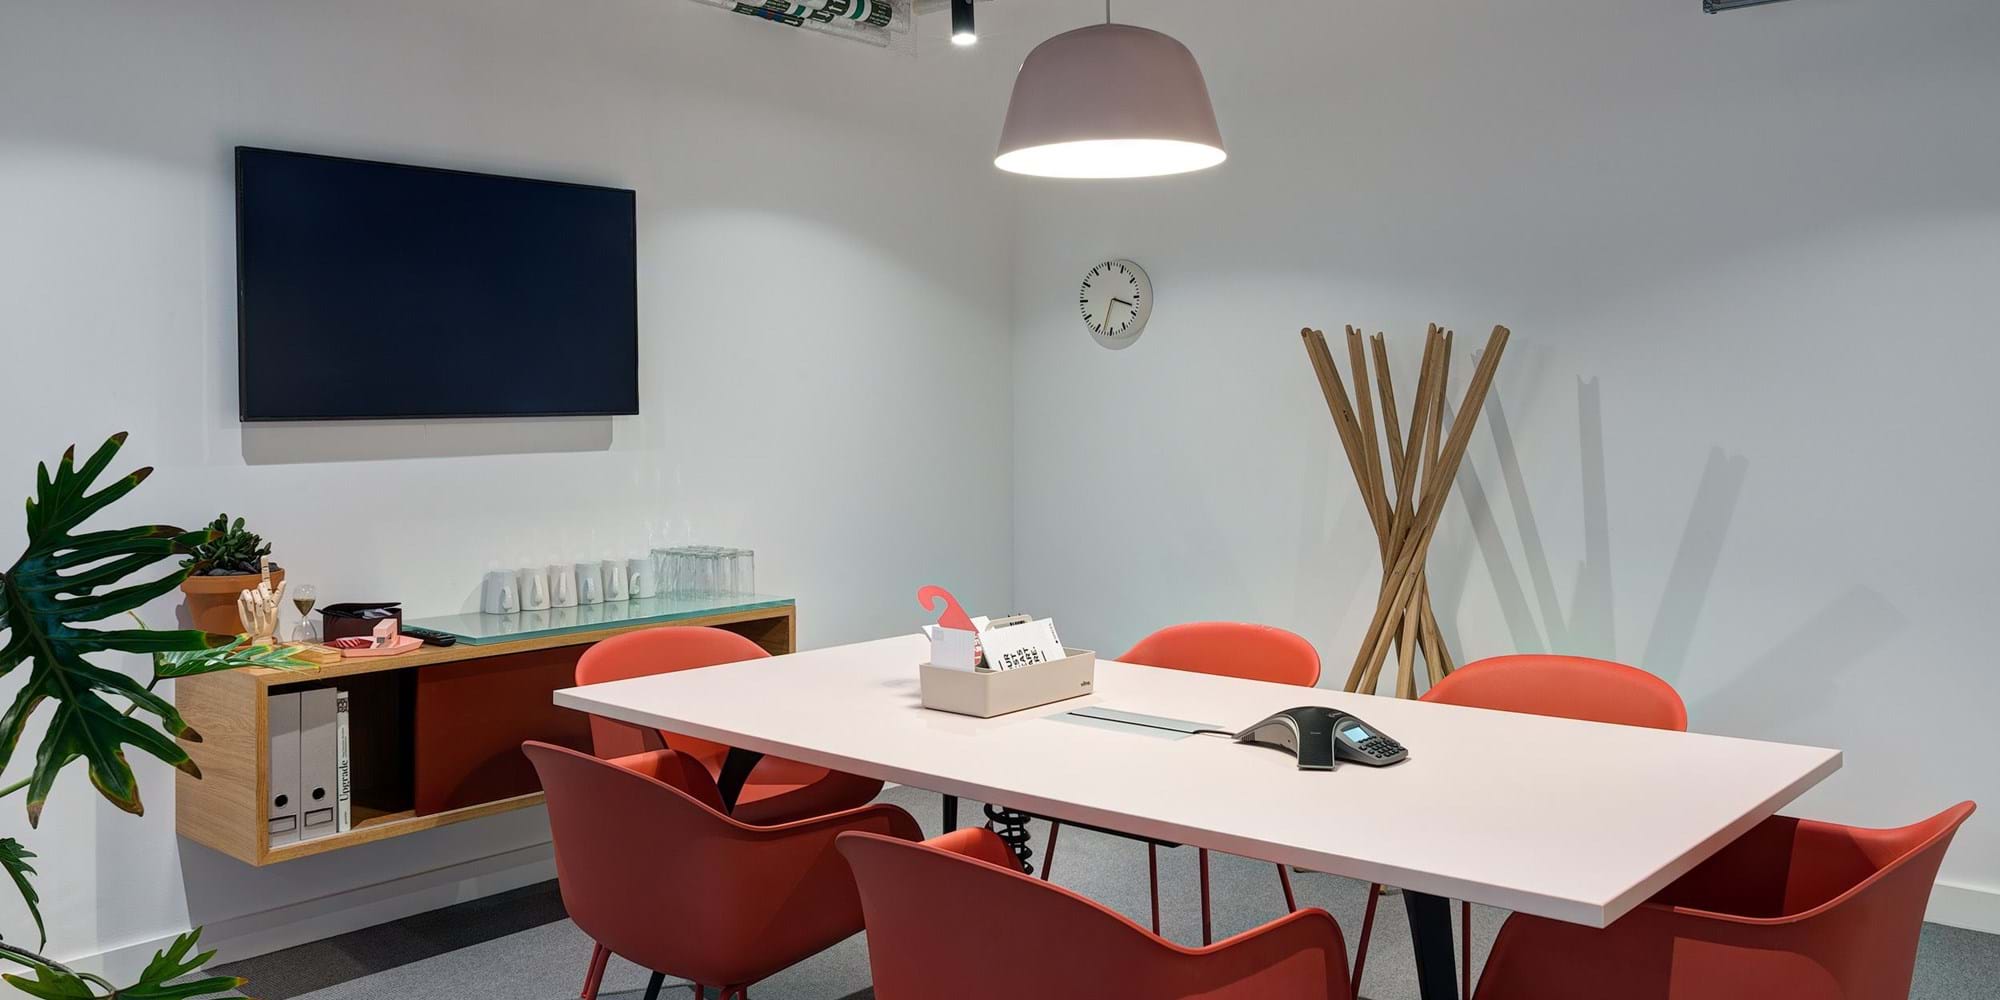 Modus Workspace office design, fit out and refurbishment - Regus spaces Epworth - Spaces Epworth 26 highres sRGB.jpg